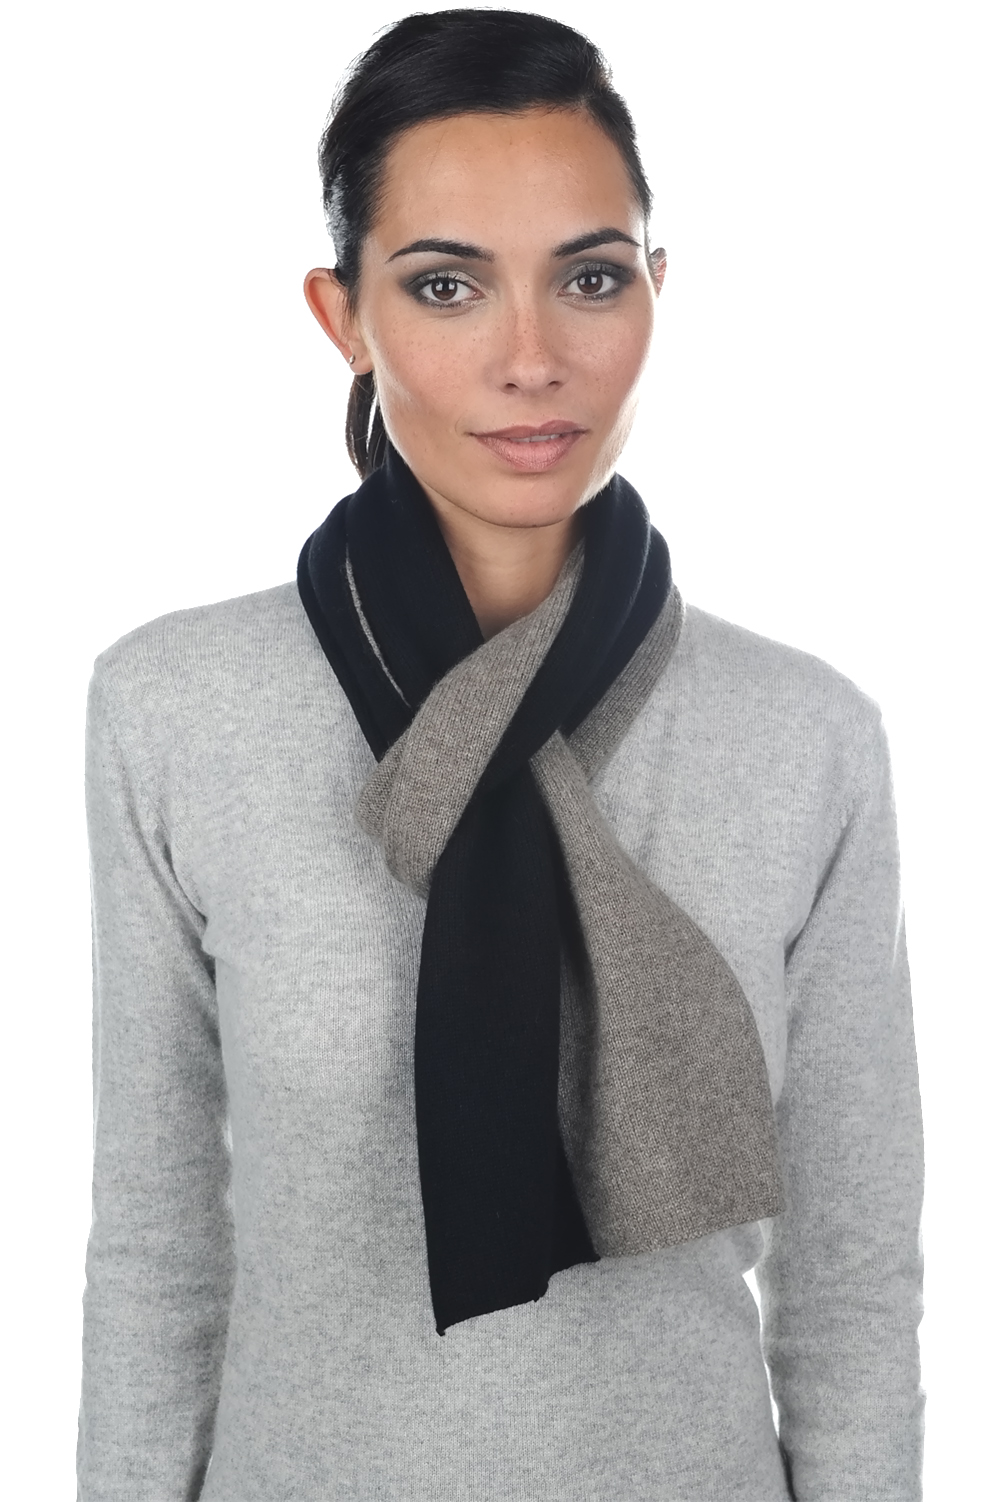 Cashmere & Yak accessories scarf mufflers luvo black natural 164 x 26 cm